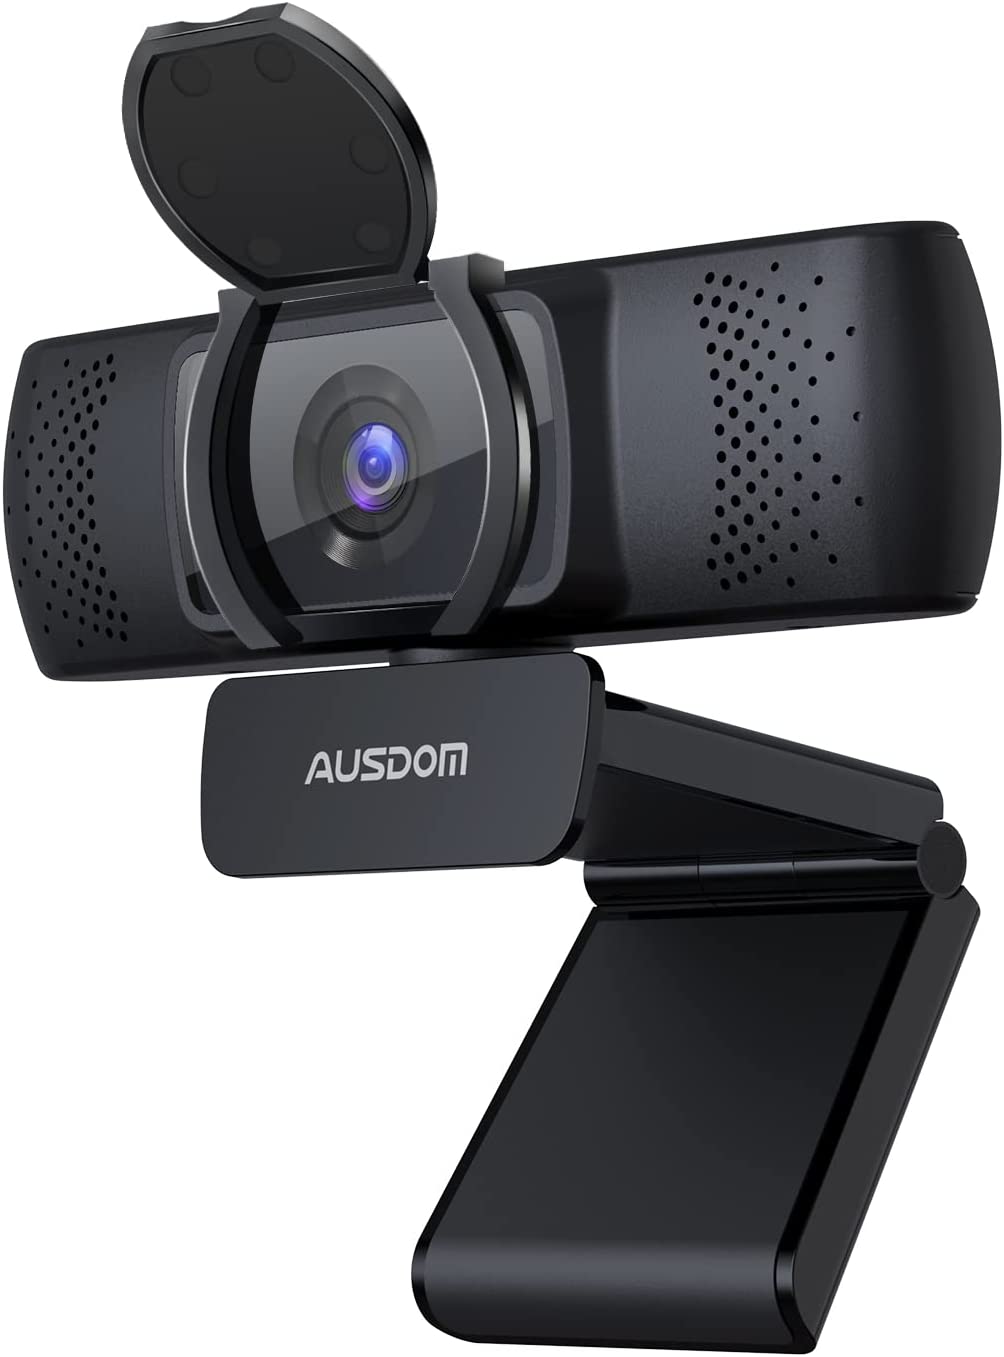 Business Webcam for PC, AUSDOM AF640 Full HD 1080p/30fps Video Calling (LNC)